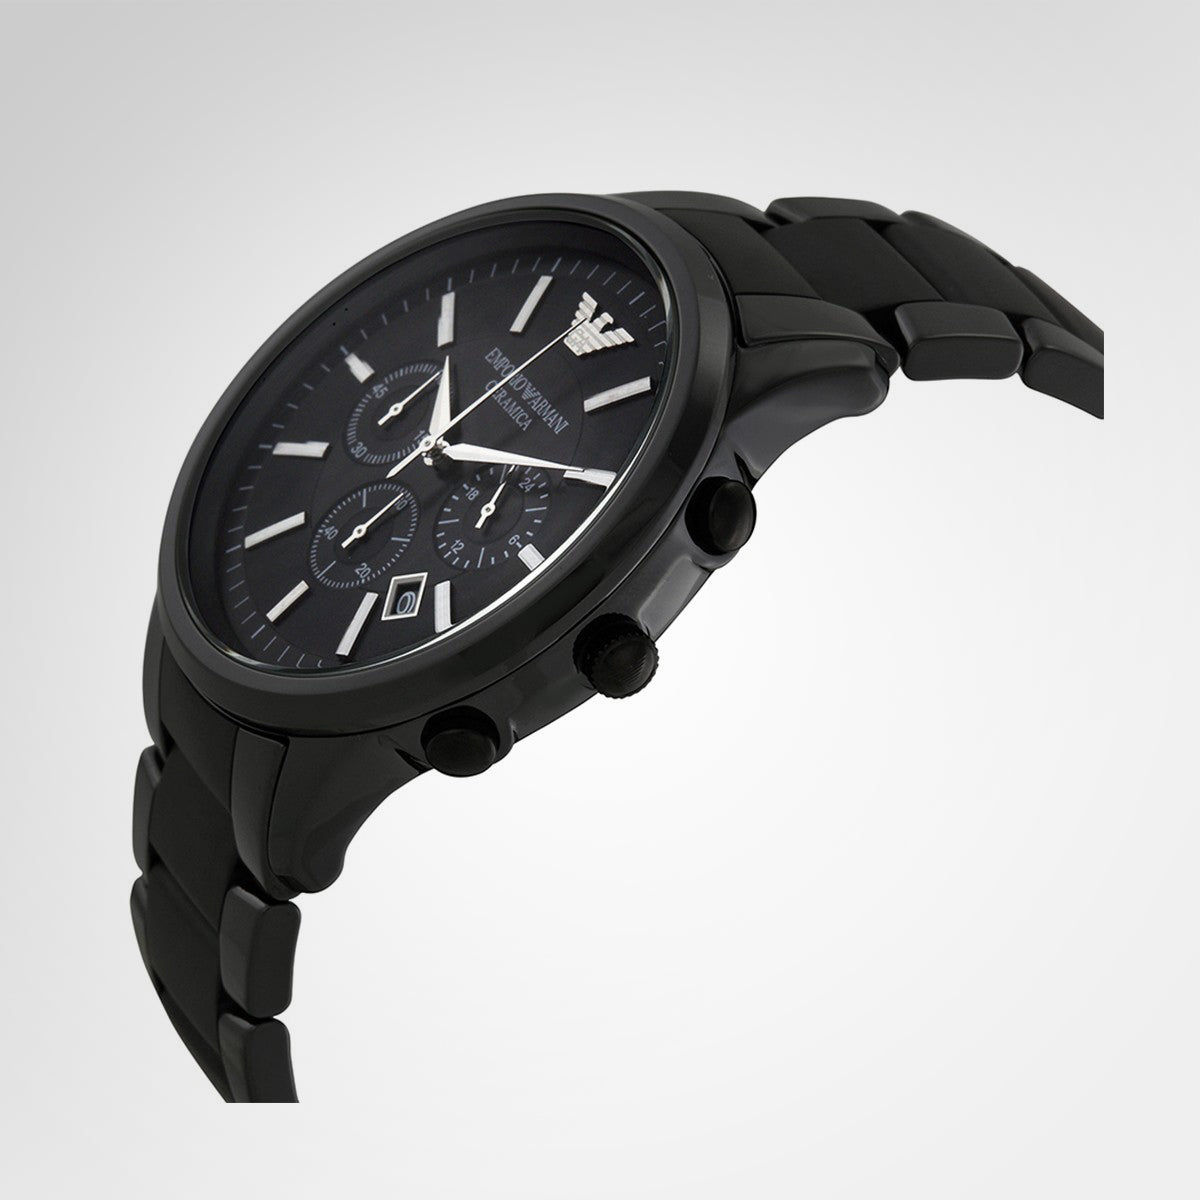 ar1451 armani watch price